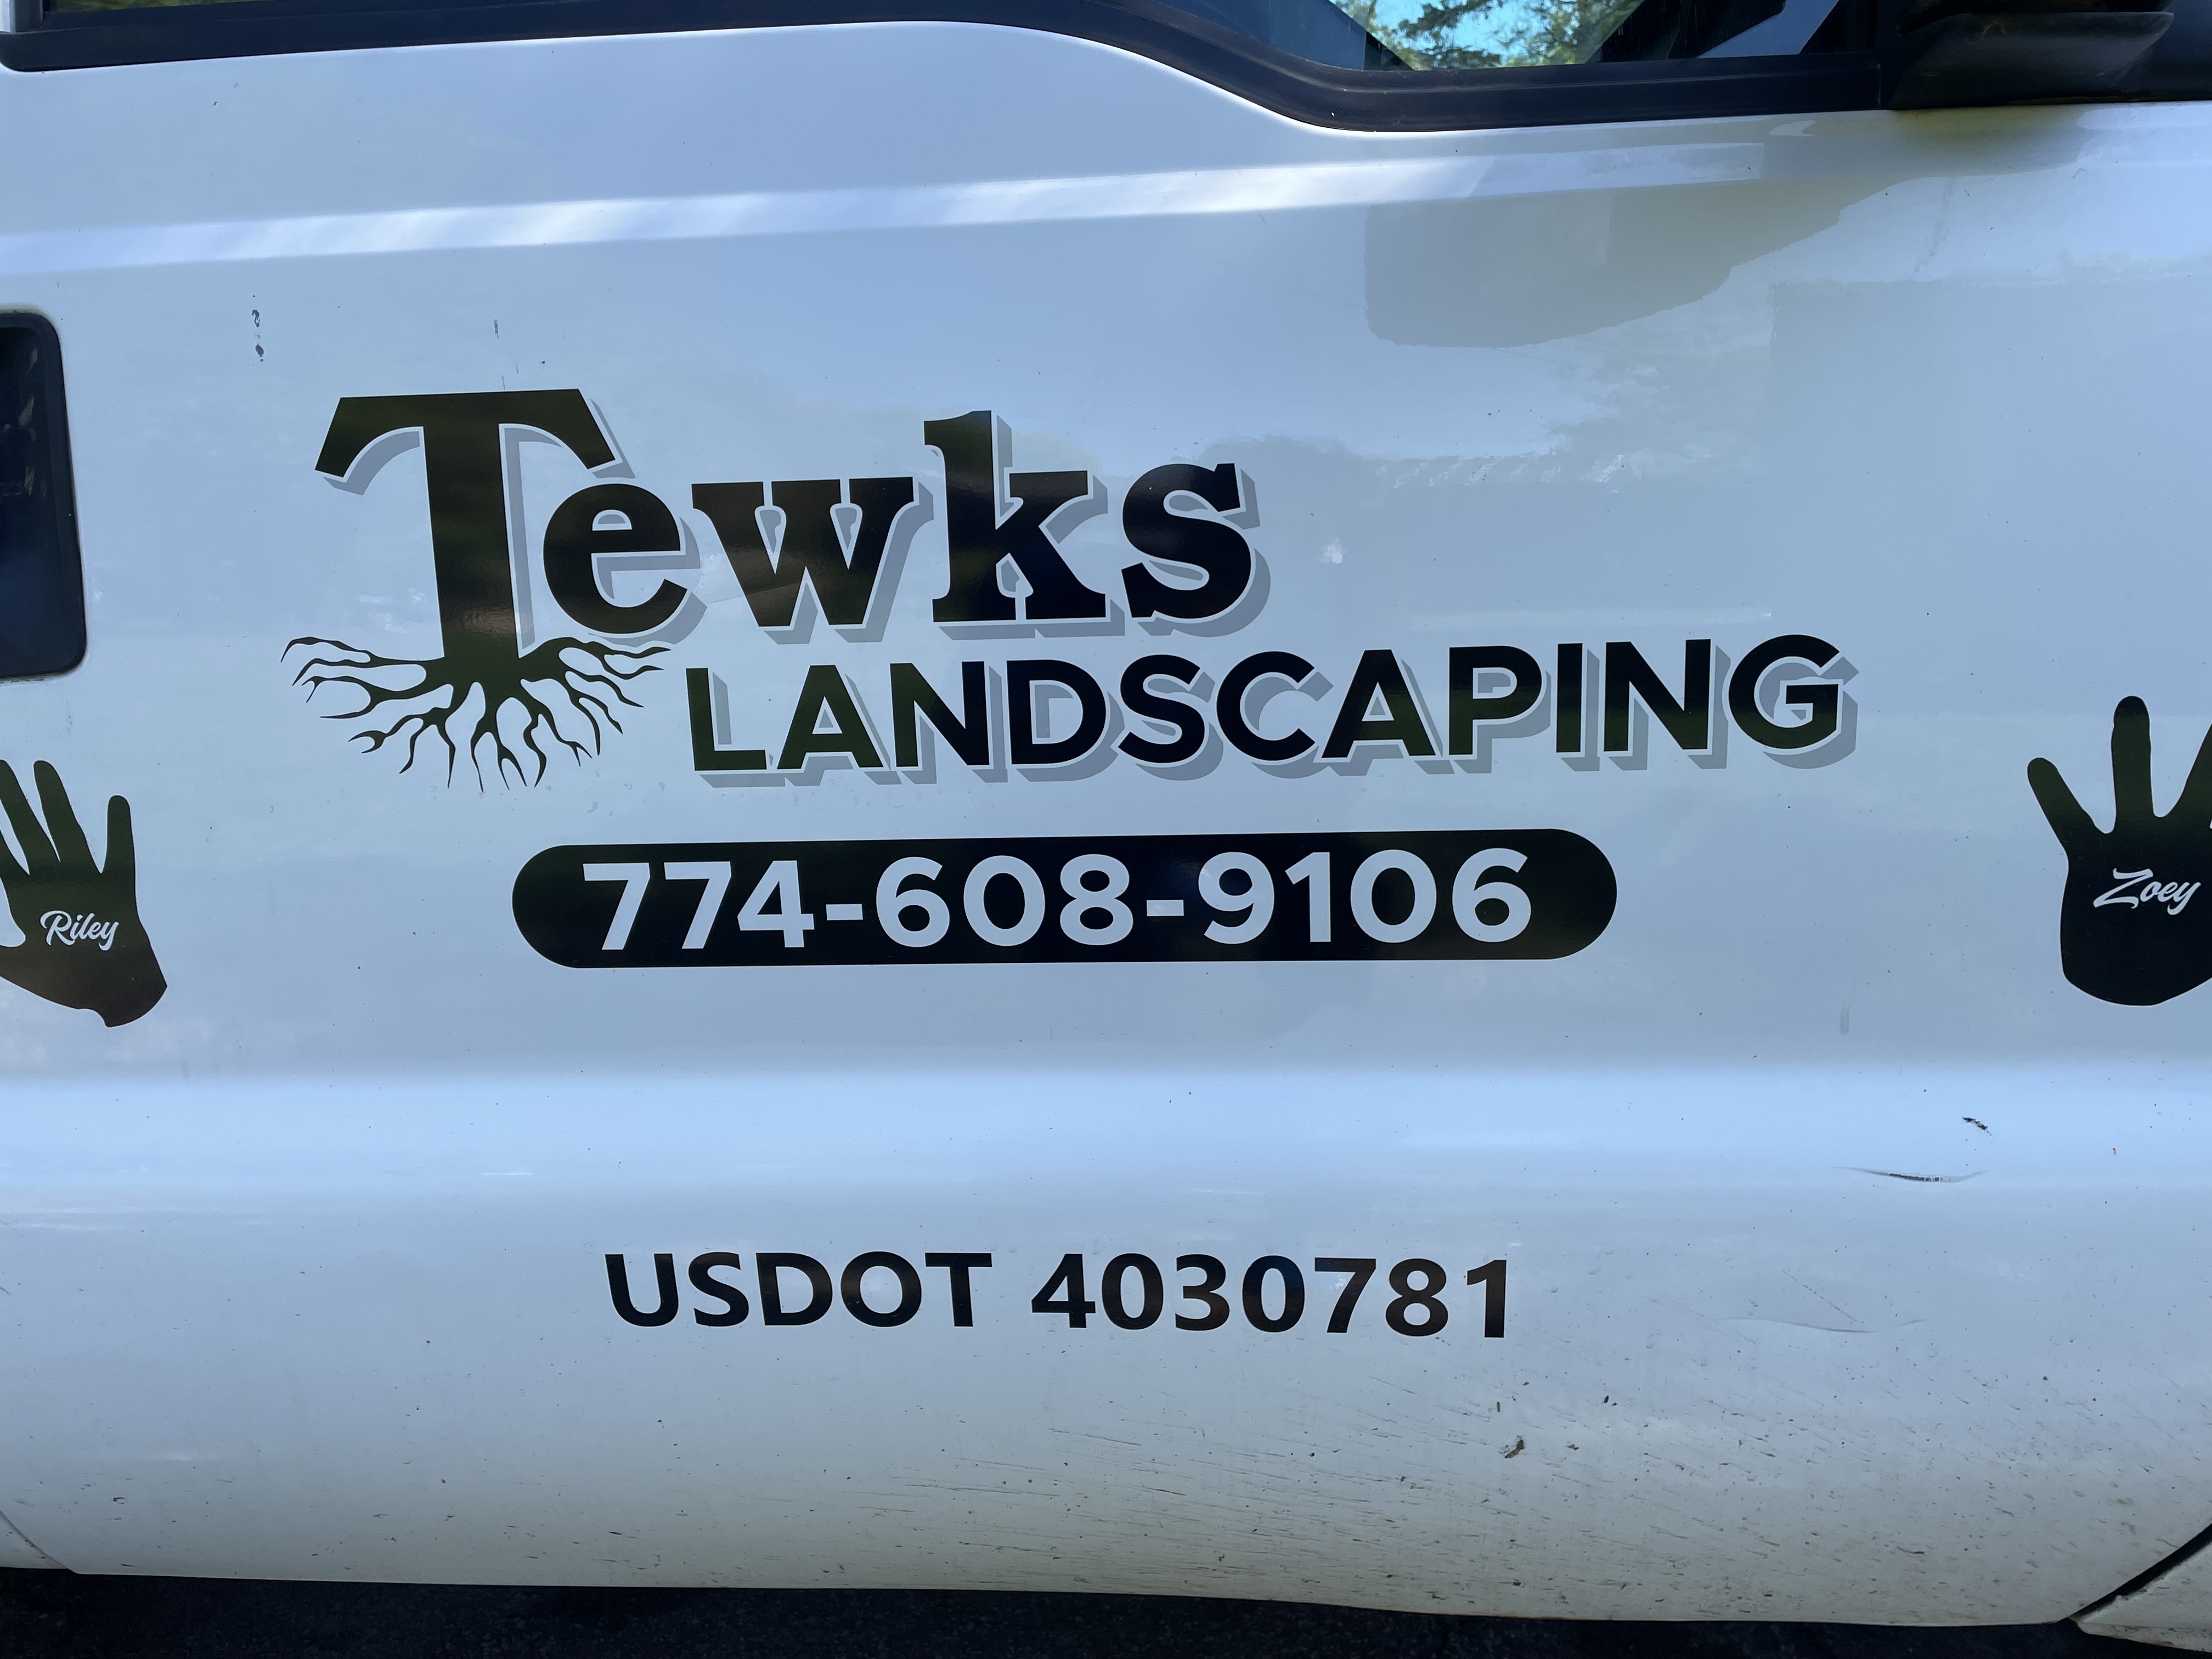 Tewks Landscape Logo